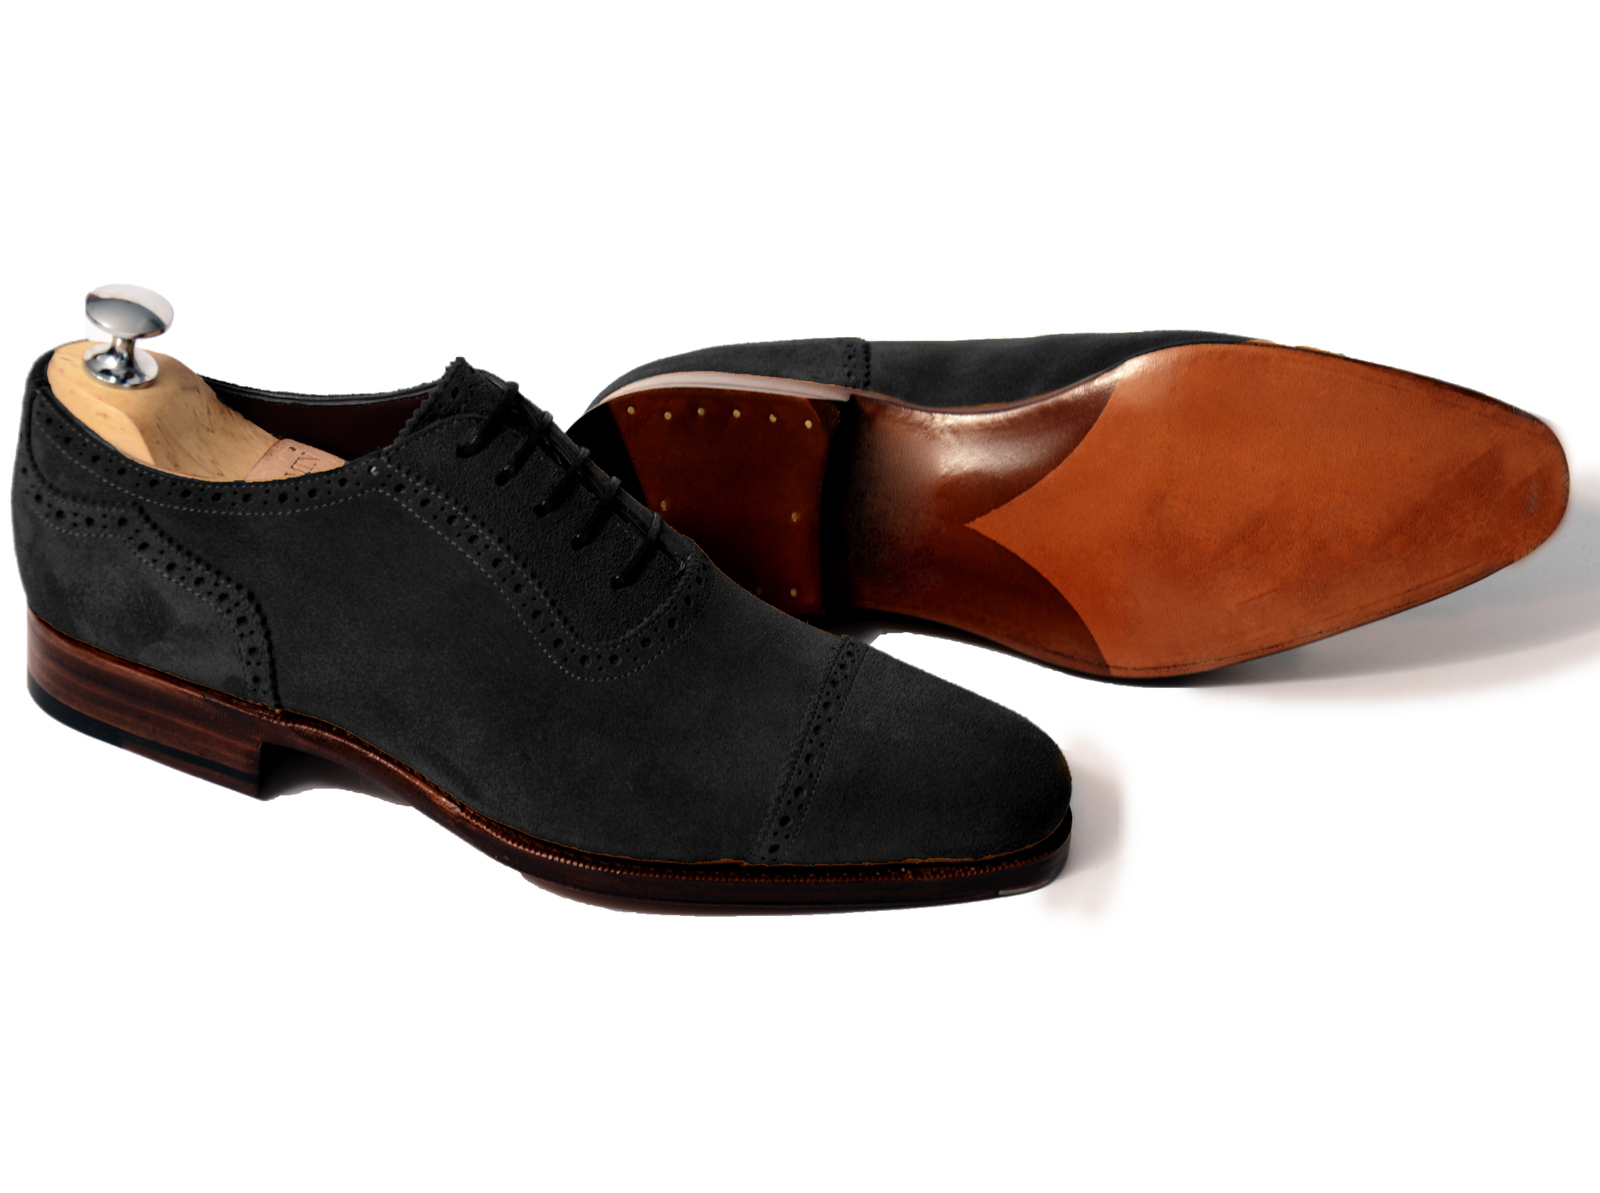 New Handmade Men's Black Cap Toe Dress Shoes - Dress/Formal